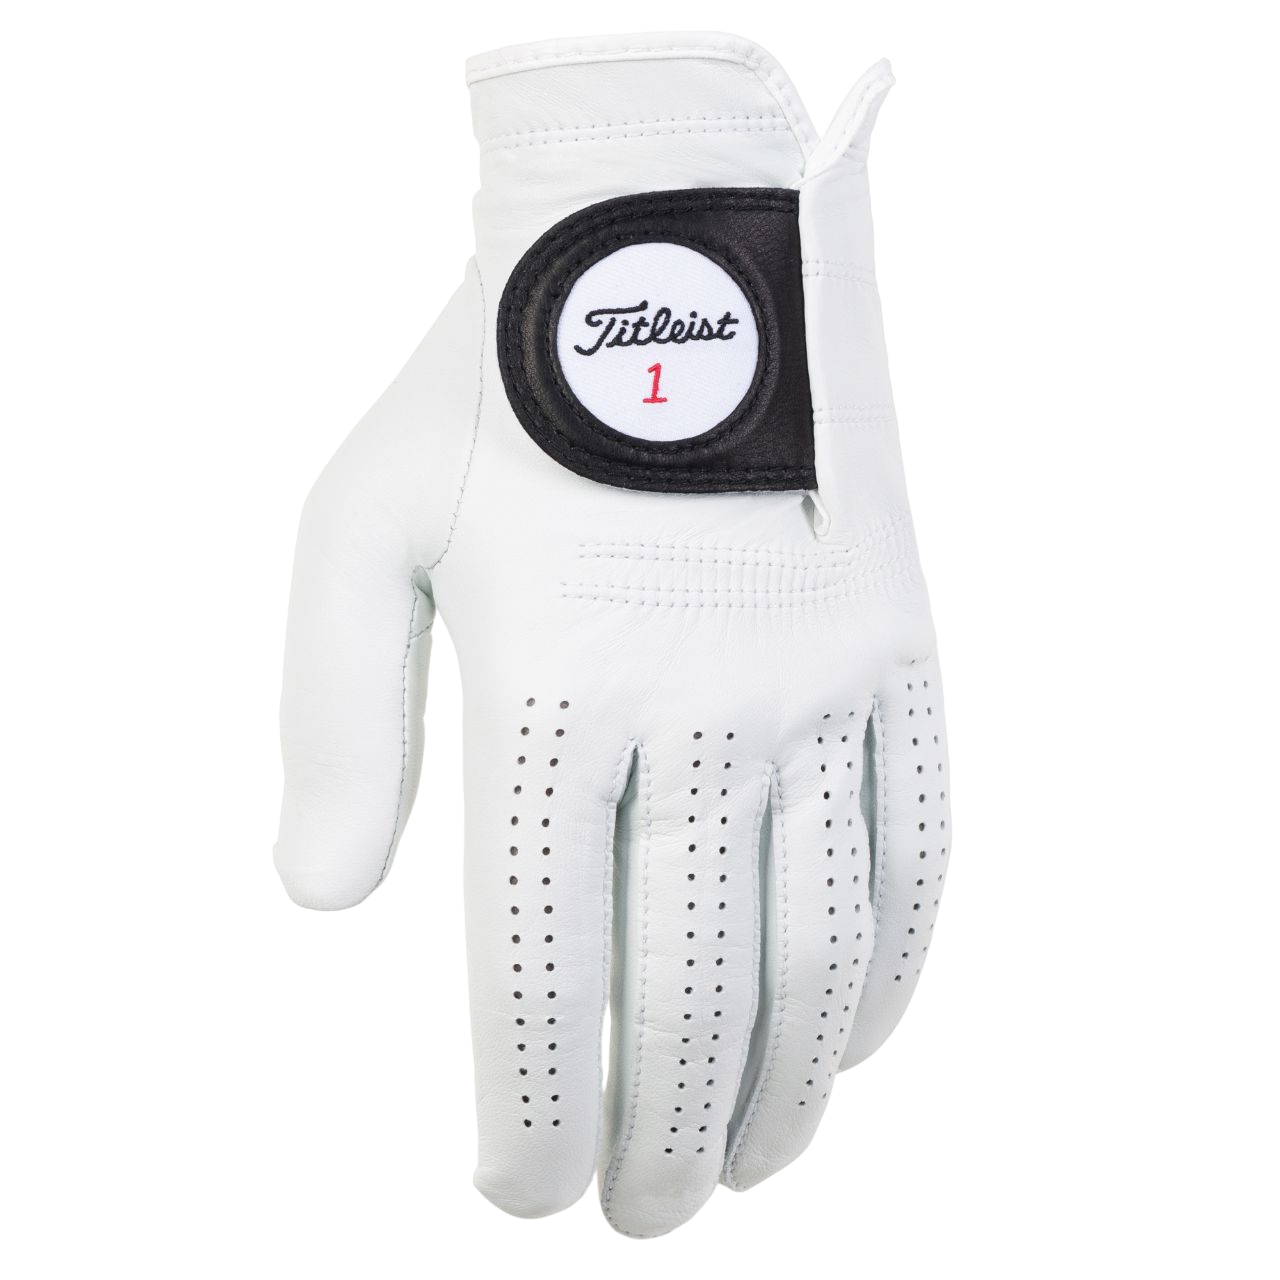 Explore Golf Gear  Titleist Bags, Headwear, Gloves & More